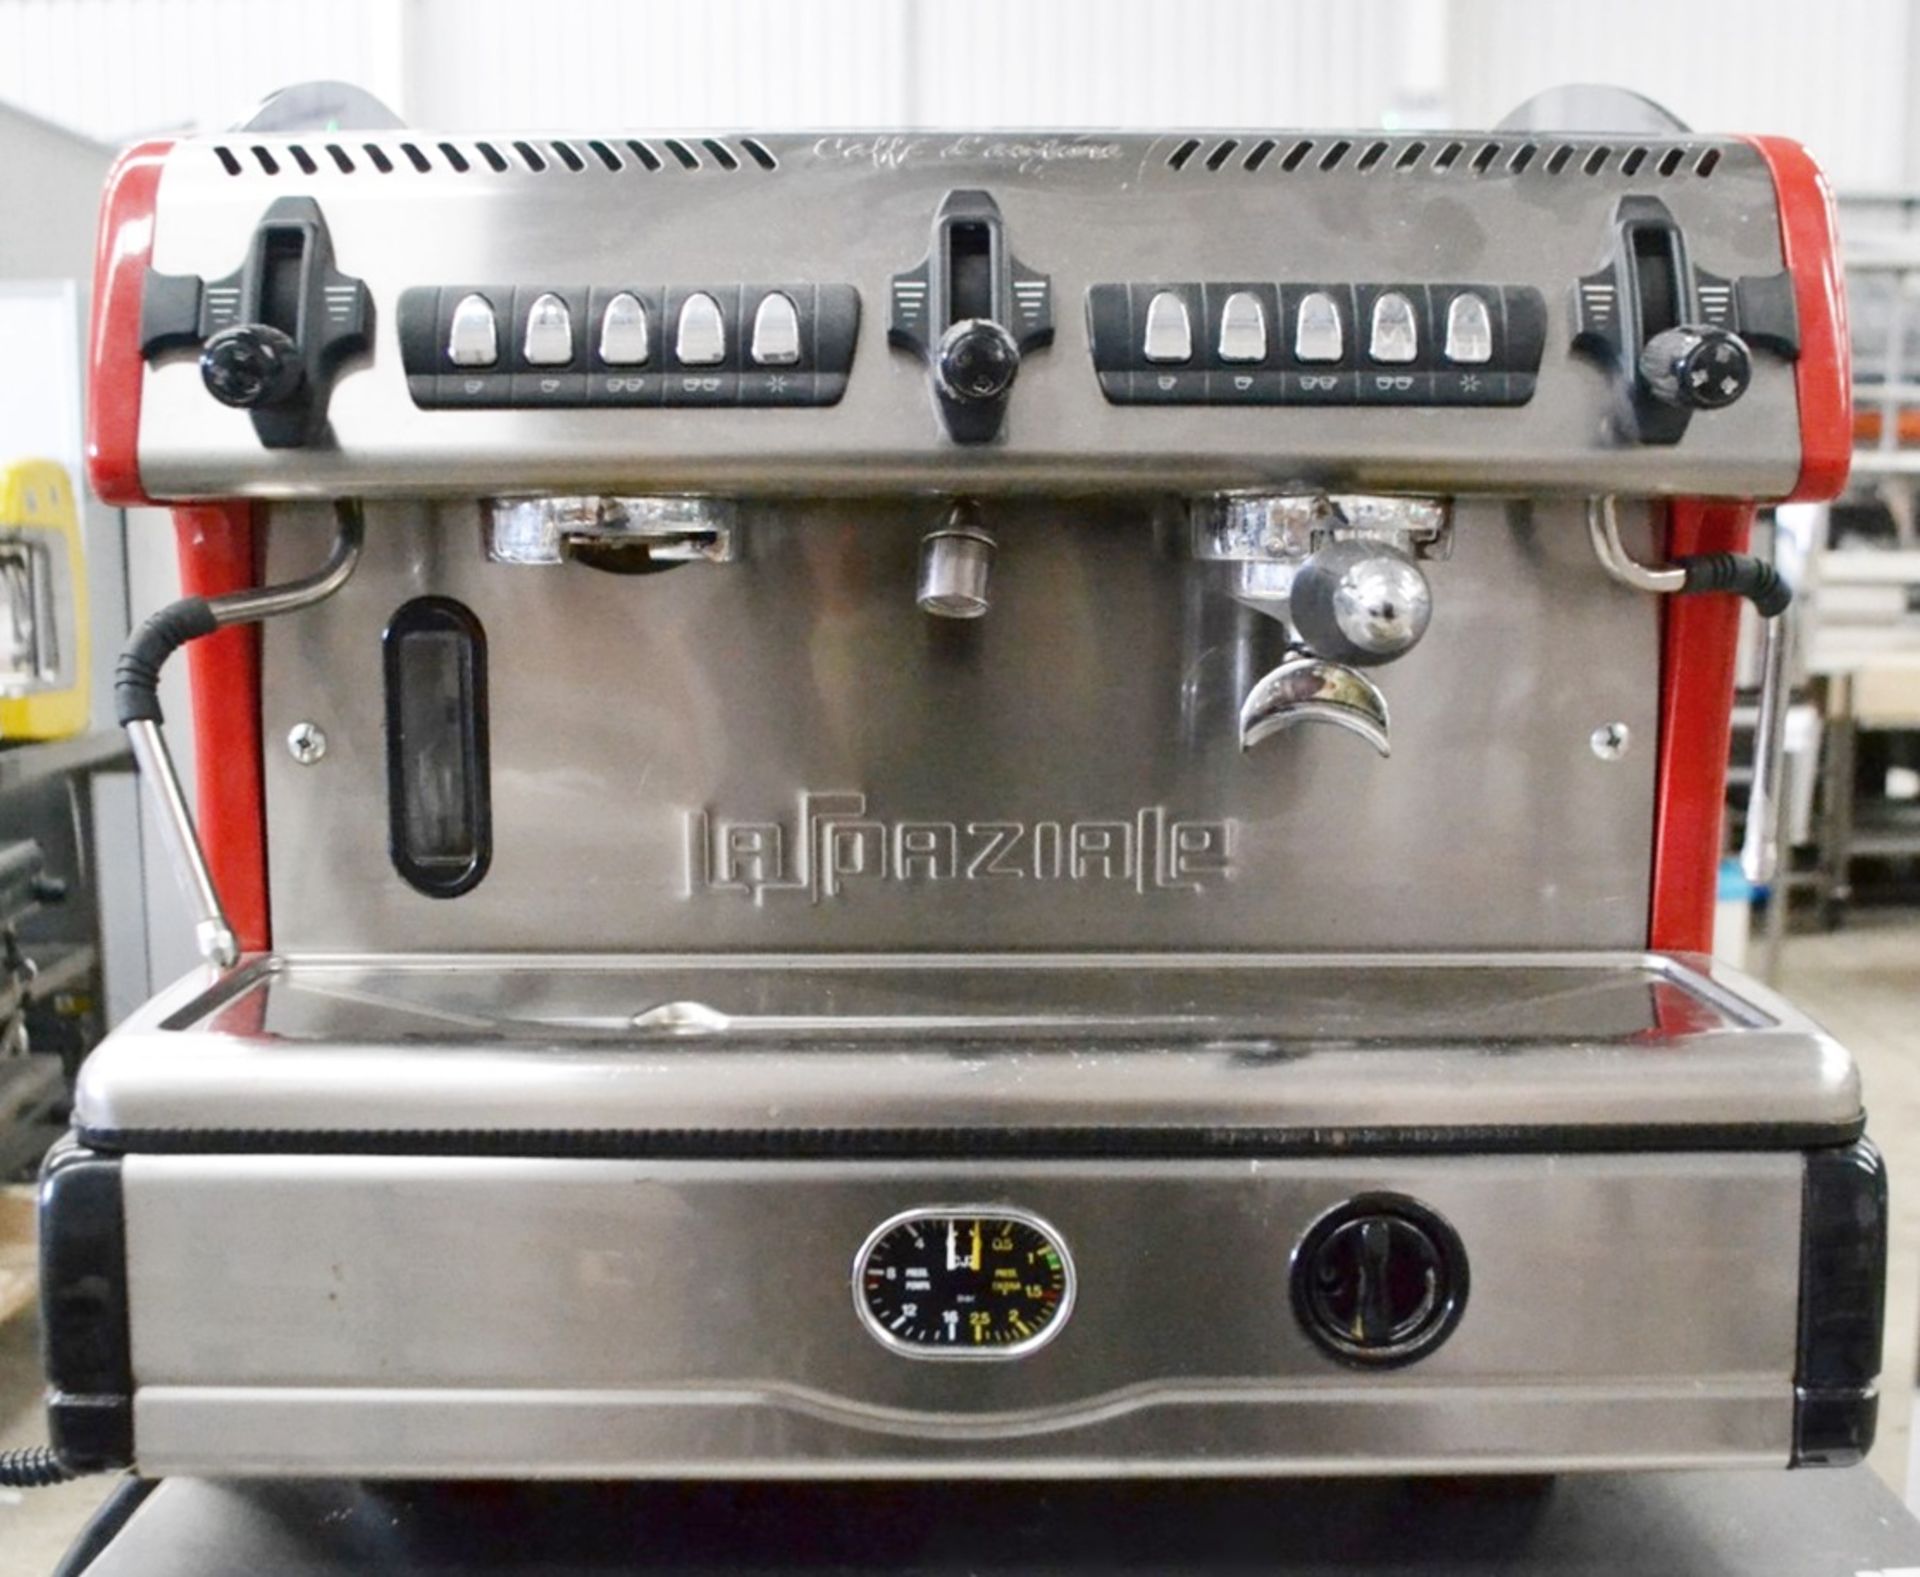 1 x La Spaziale EK2 Compact 2 Group Espresso Coffee Machine - Bright Red Finish - CL350 - Ref210 - Image 2 of 6